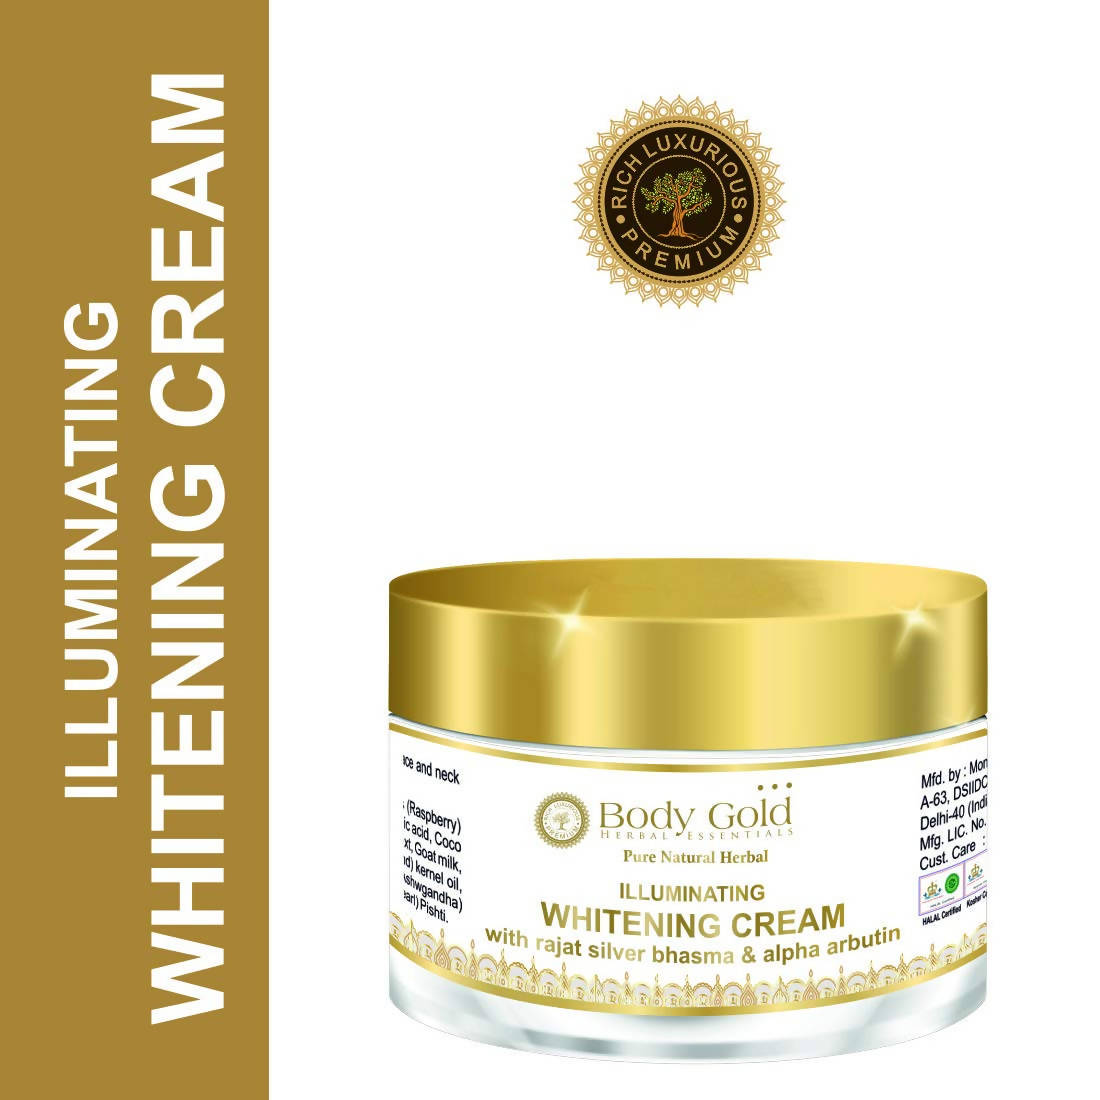 Body Gold Illuminating Whitening Cream